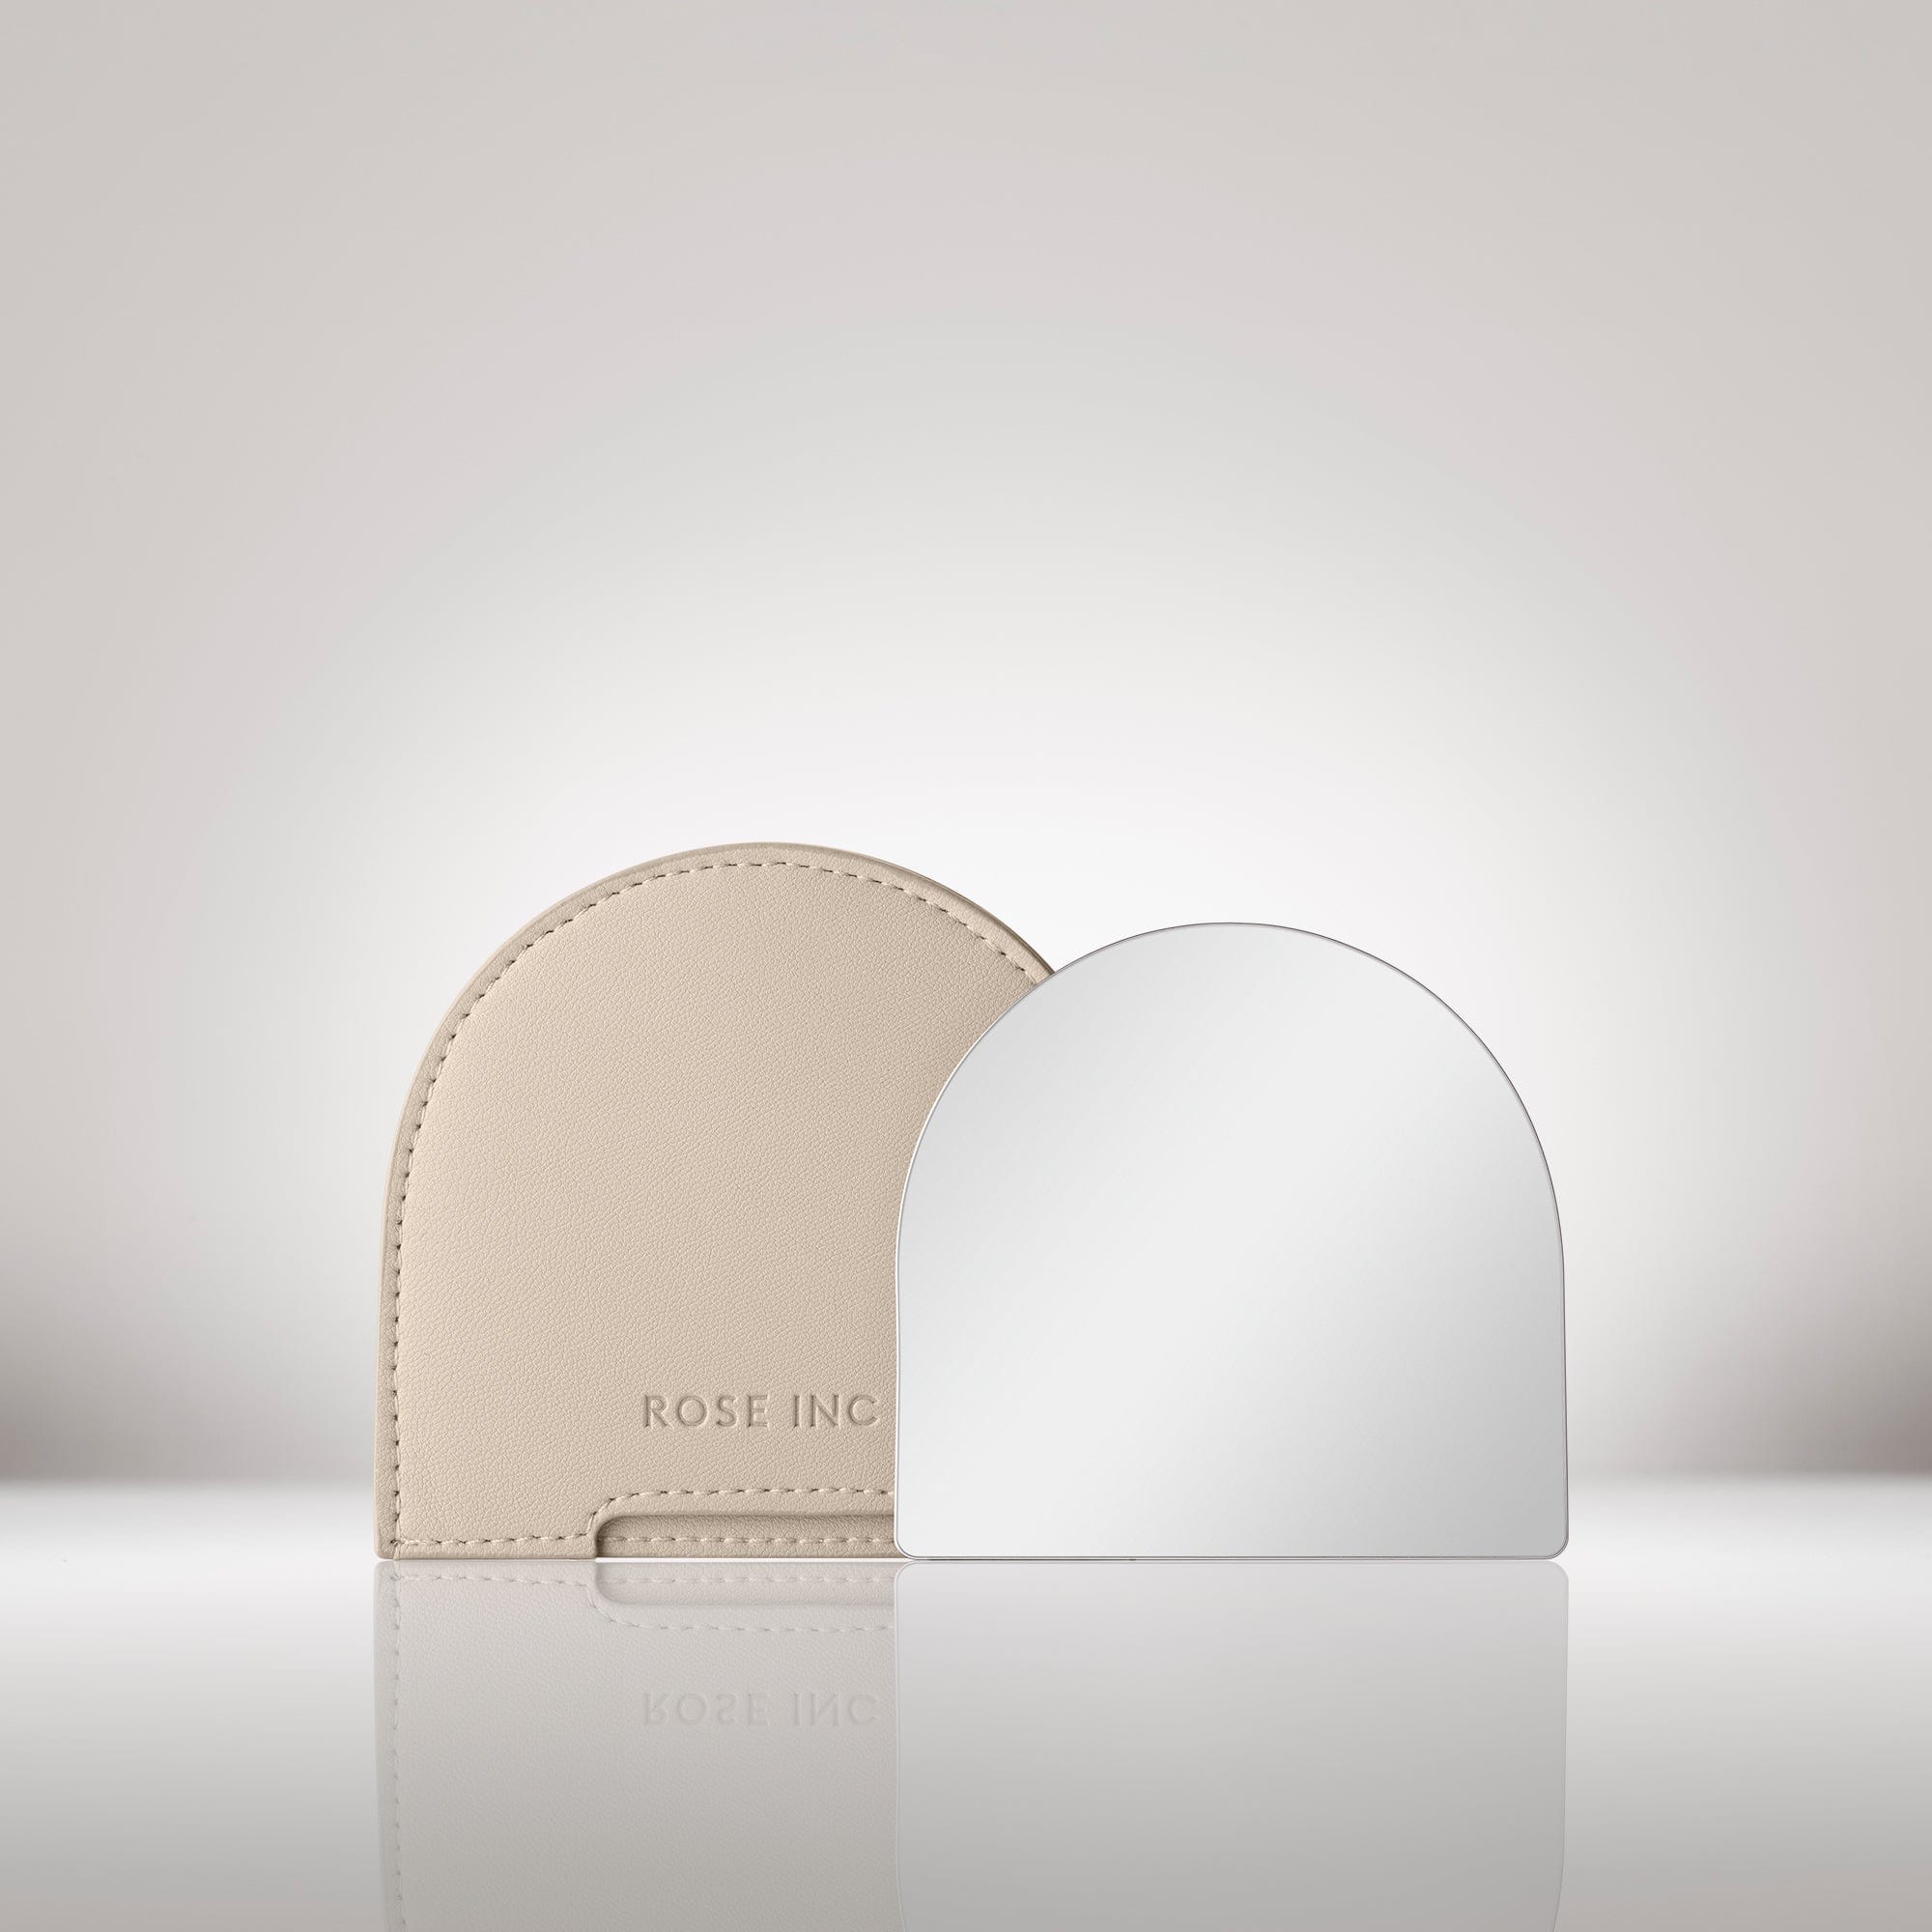 Small portable mirror, compact travel makeup mirror, elegant, rose gold